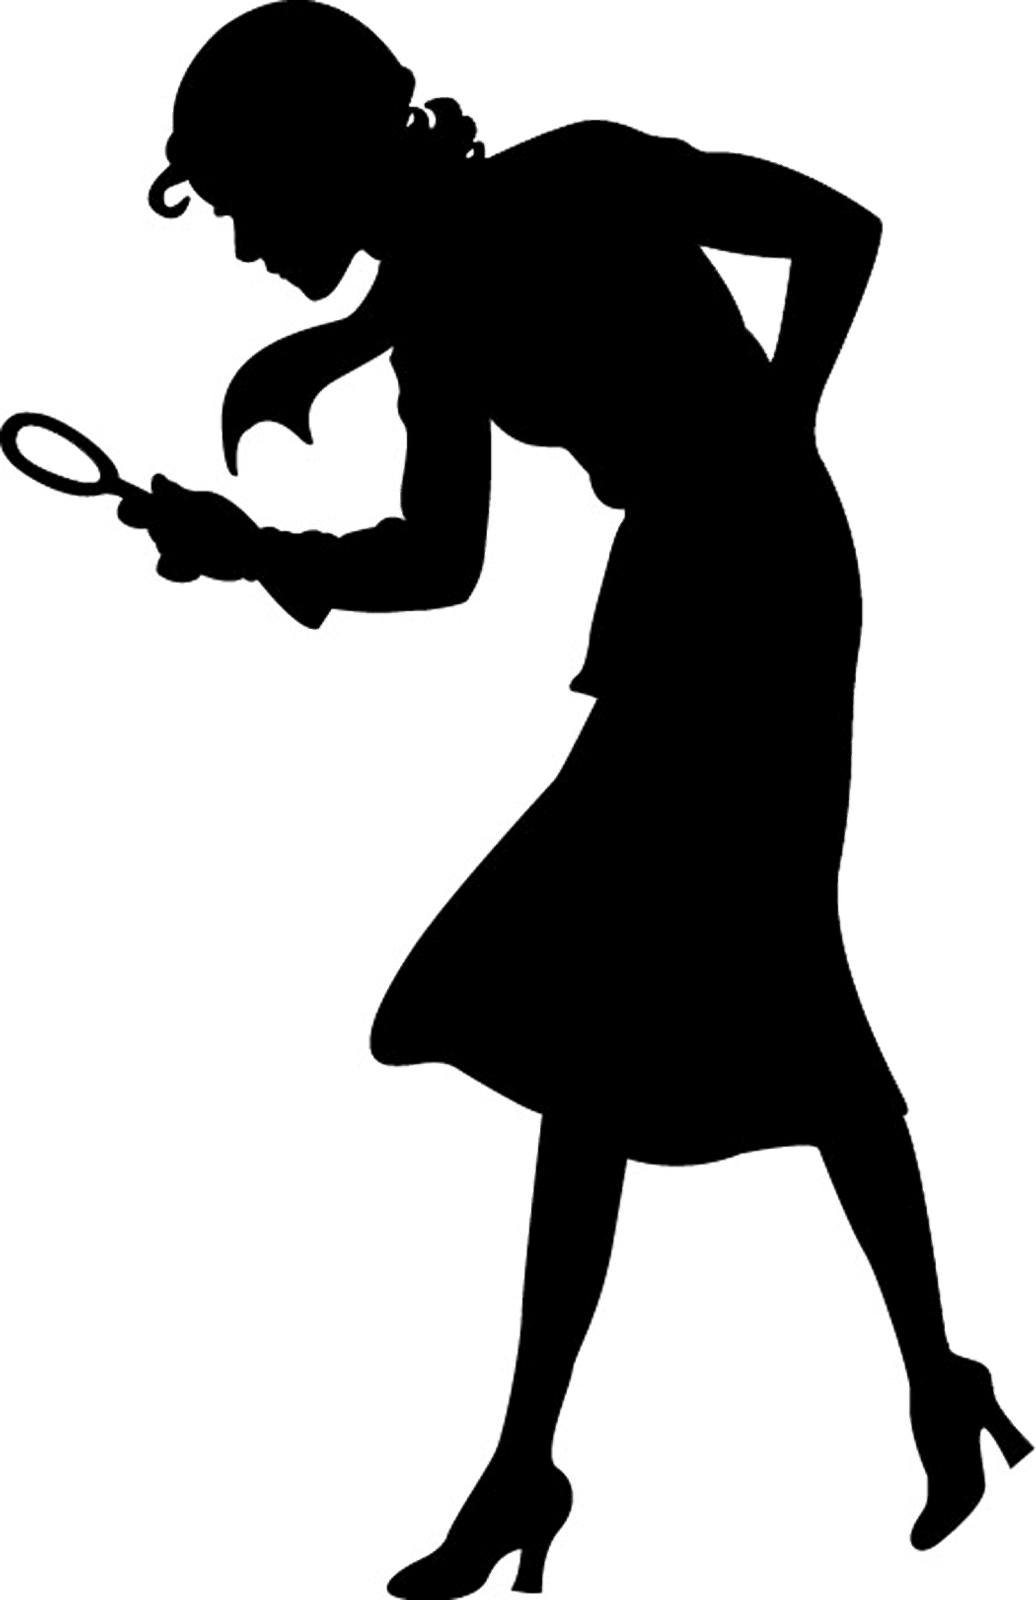 Secret Agent Woman Girl Female Pistol Silhouette Cardboard Cutout